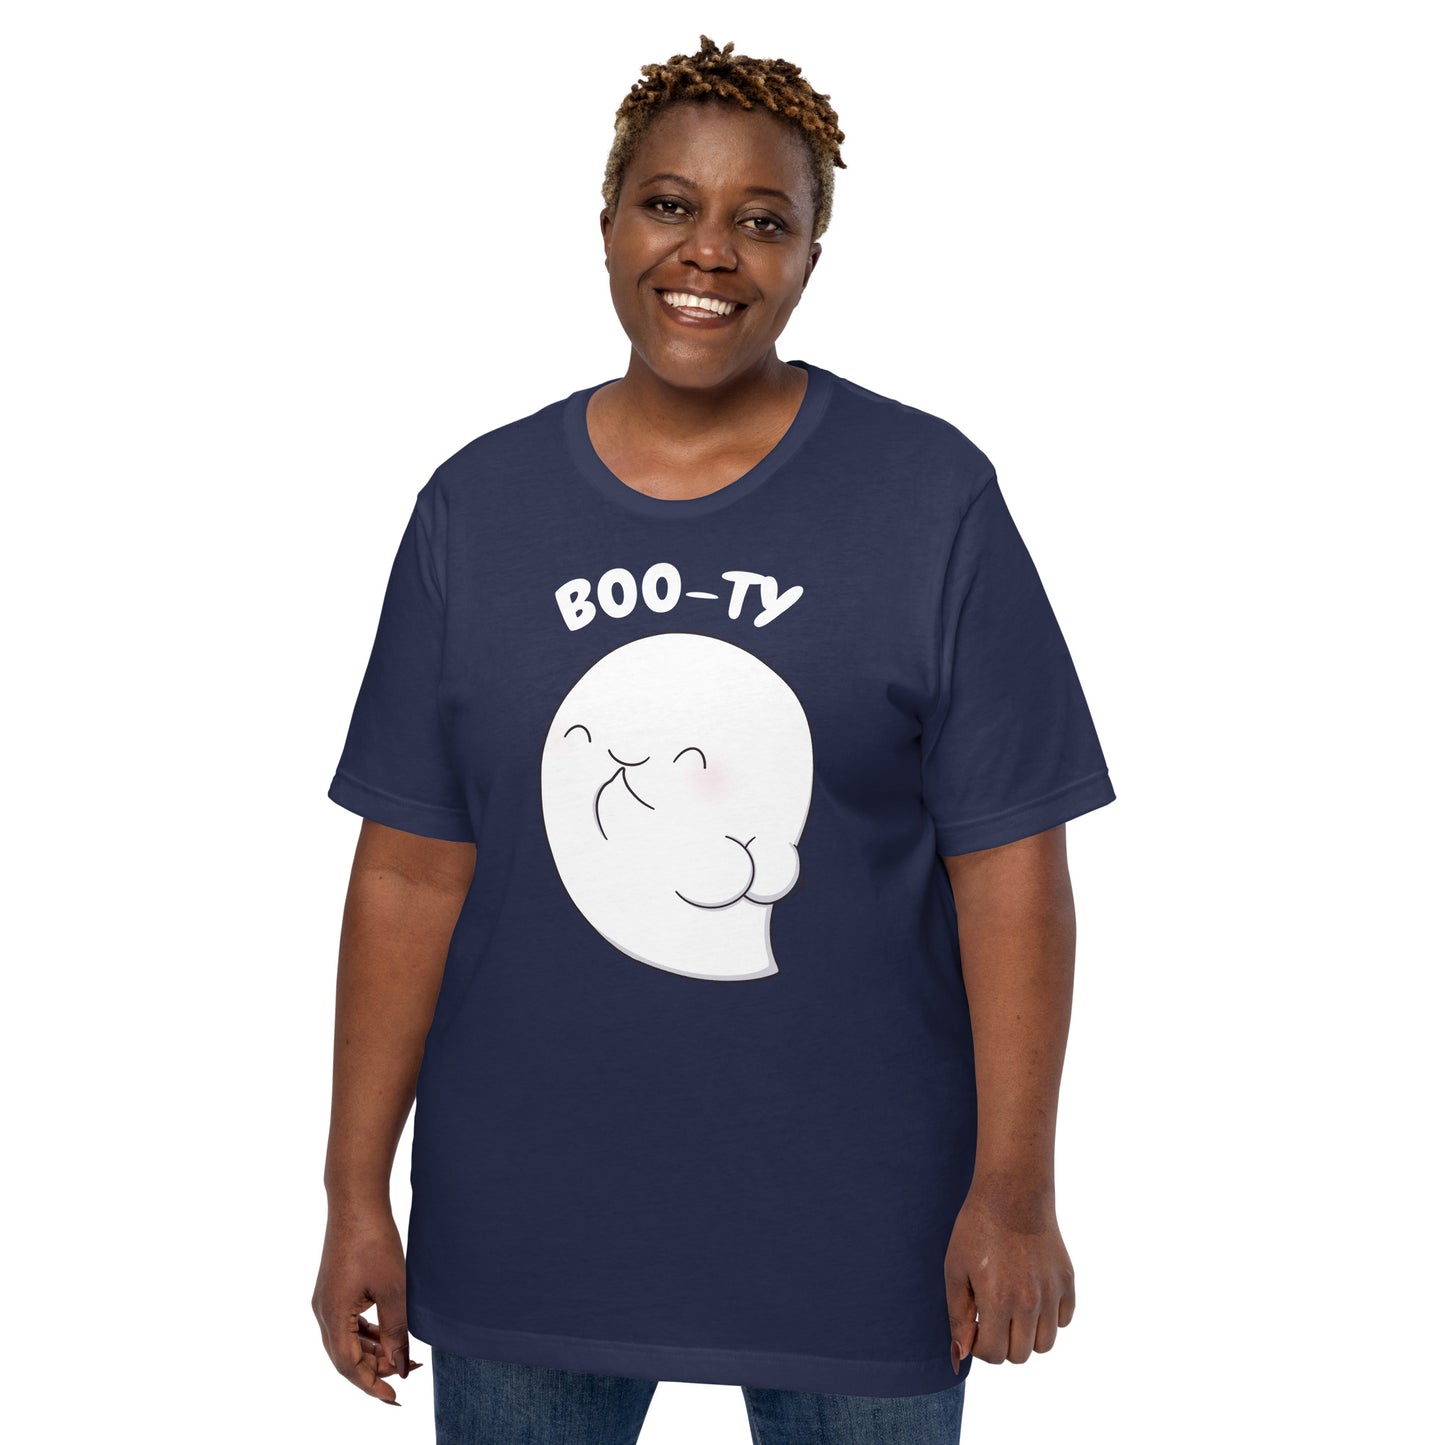 Boo-ty - Unisex t-shirt